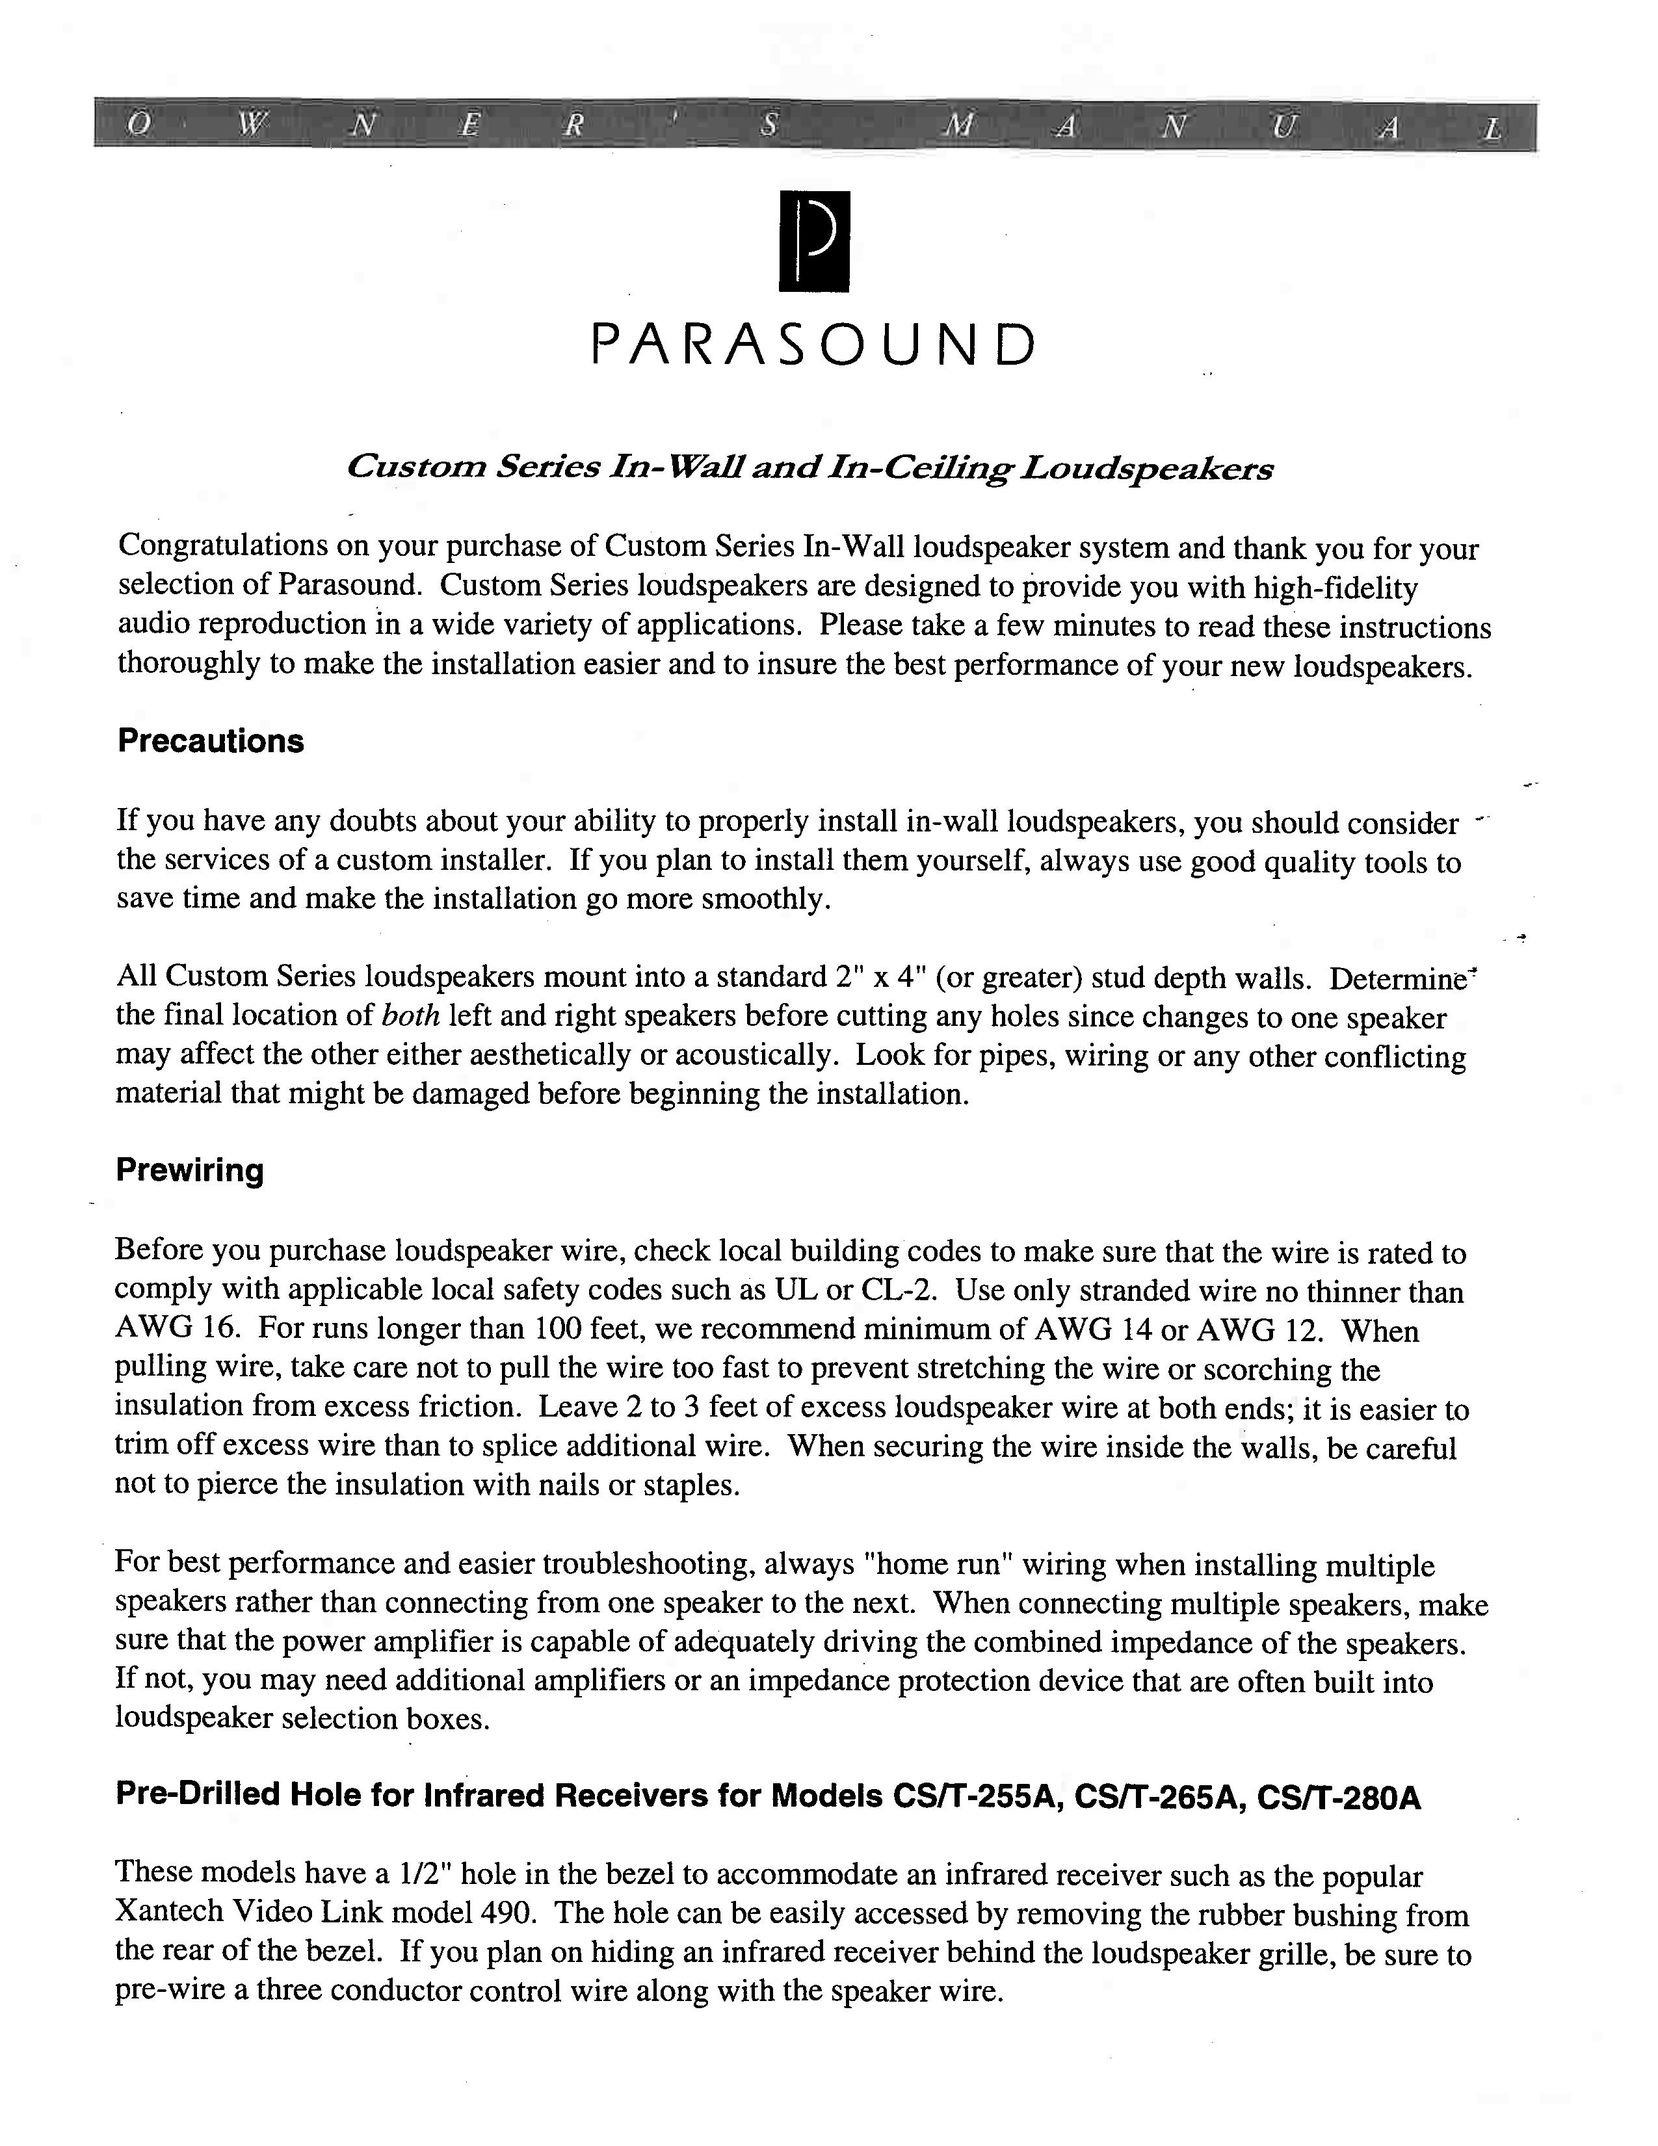 Parasound CS/T-255A Speaker User Manual